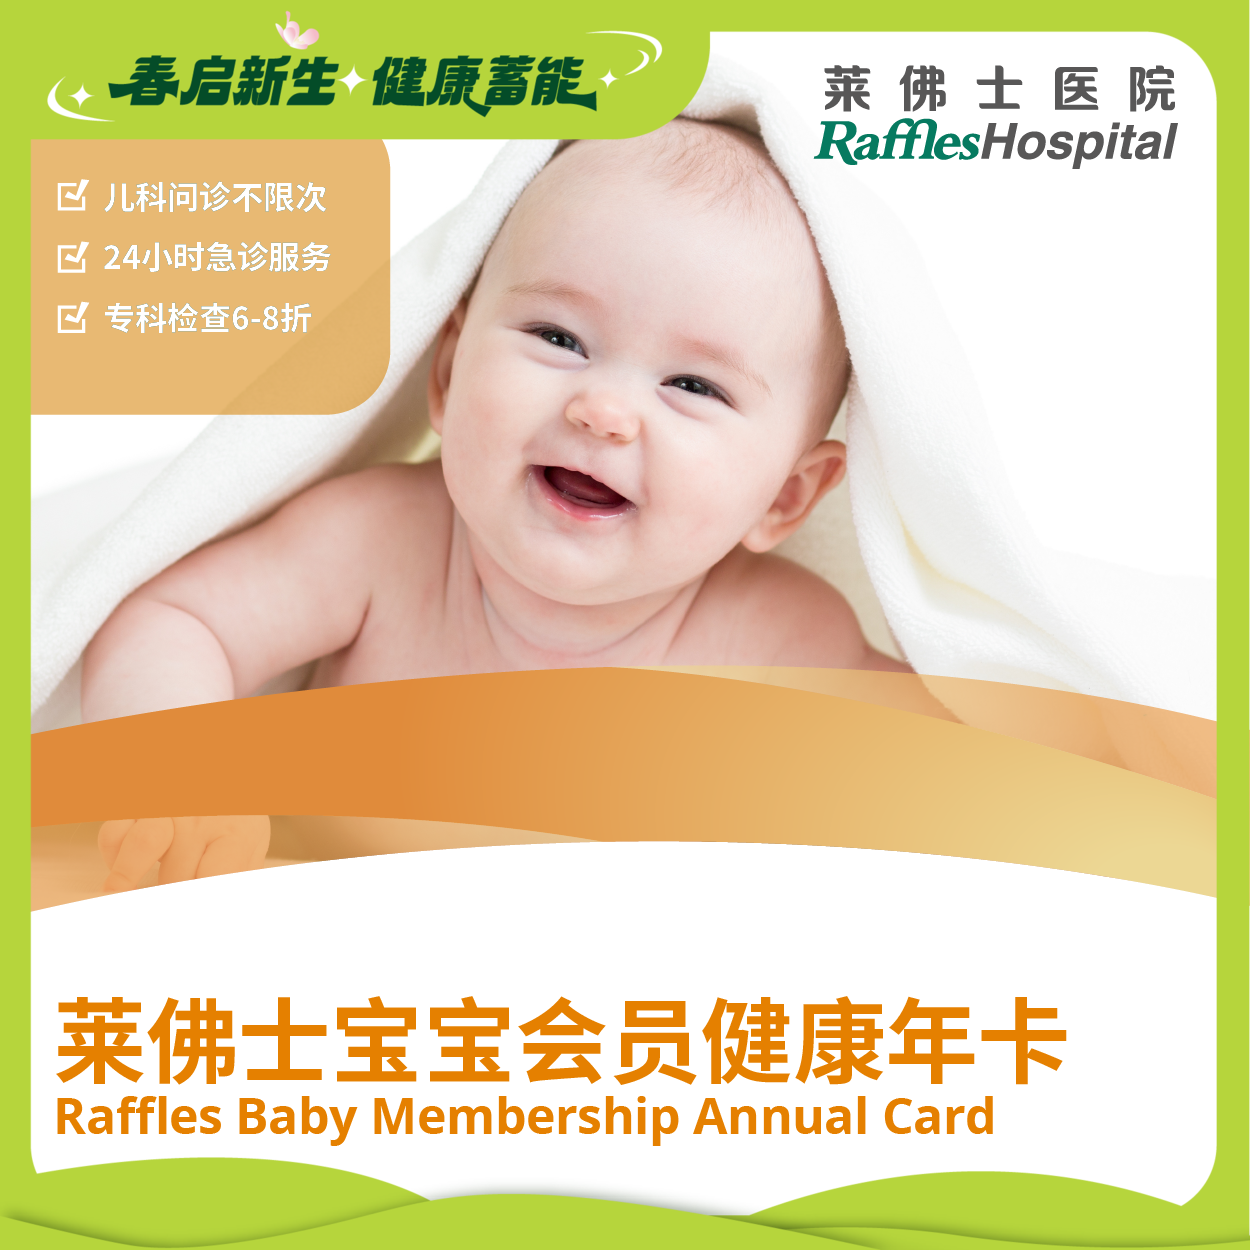 Raffles Hospital Beijing - Member Services - Raffles Baby Membership Annual Card